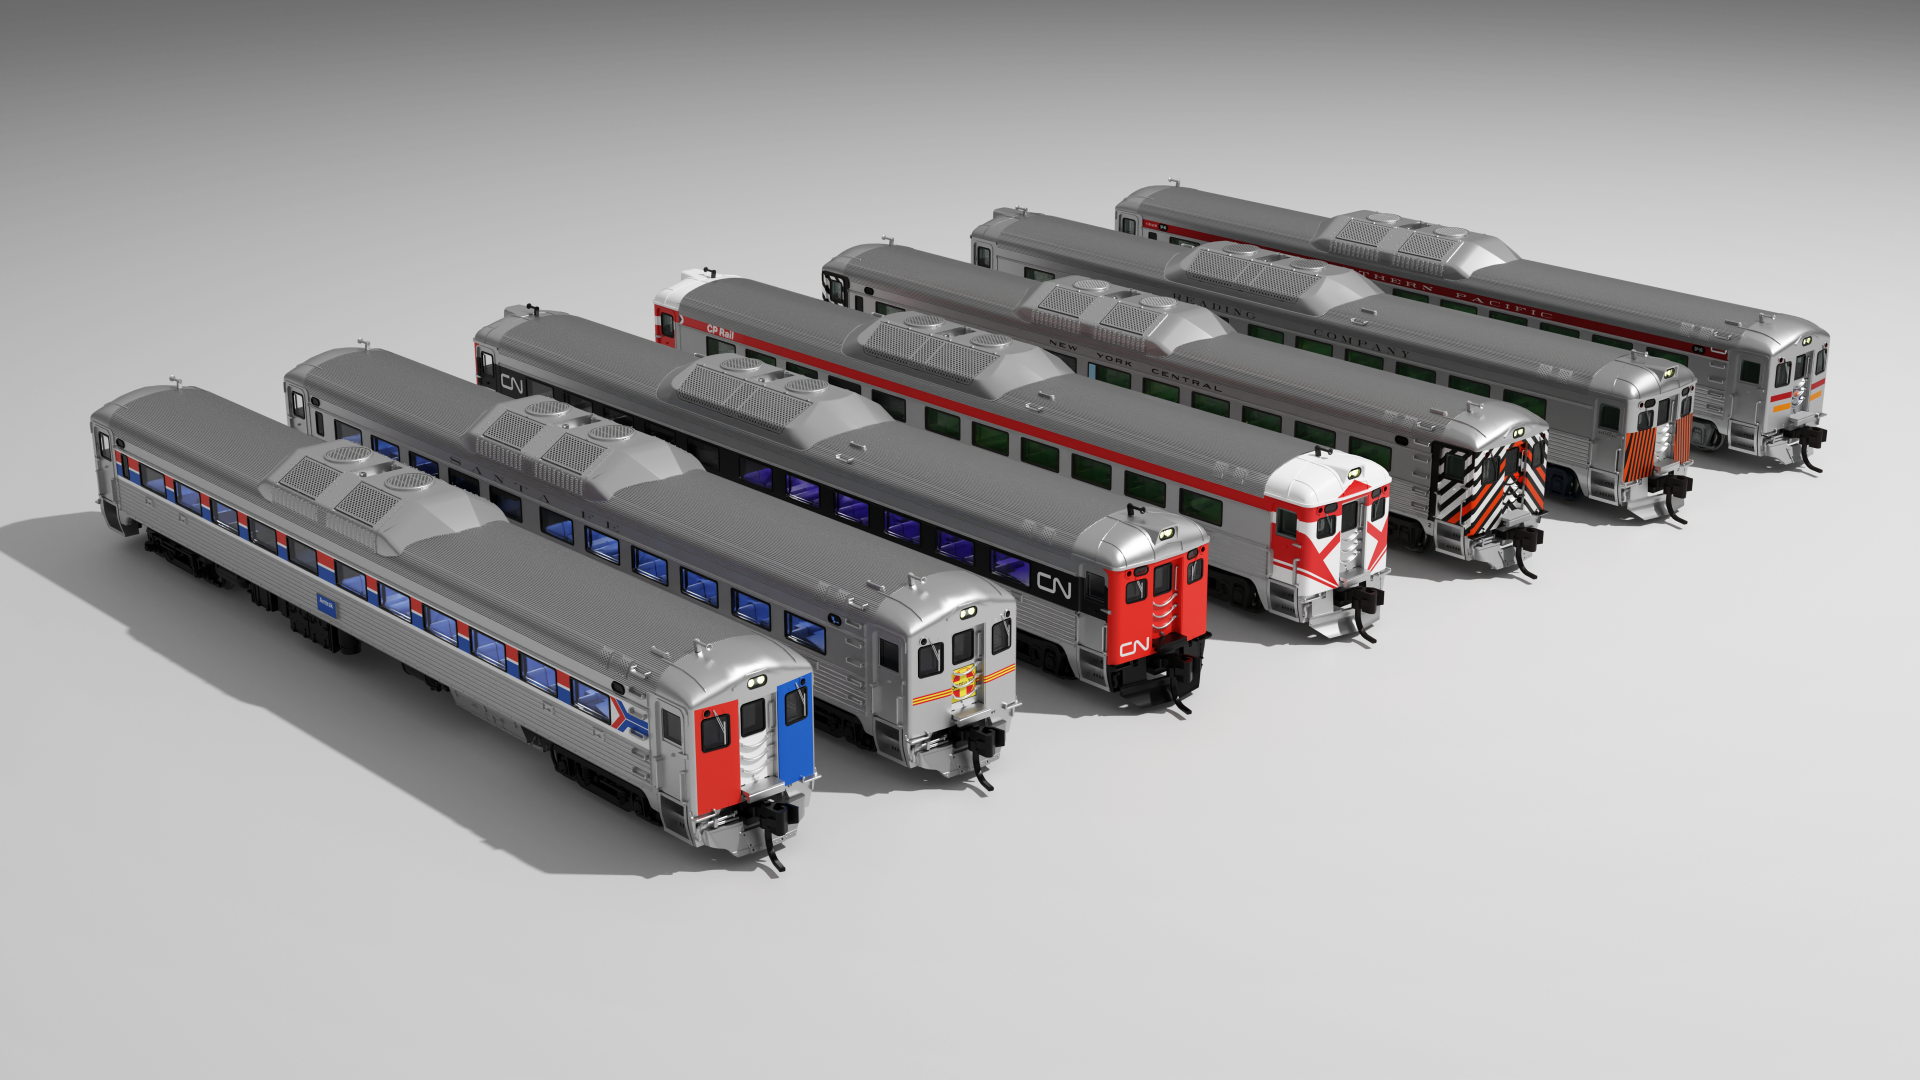 Rapido Trains Inc. - Manufacturers of Beautiful Model Trains - Rapido Trains  Inc.